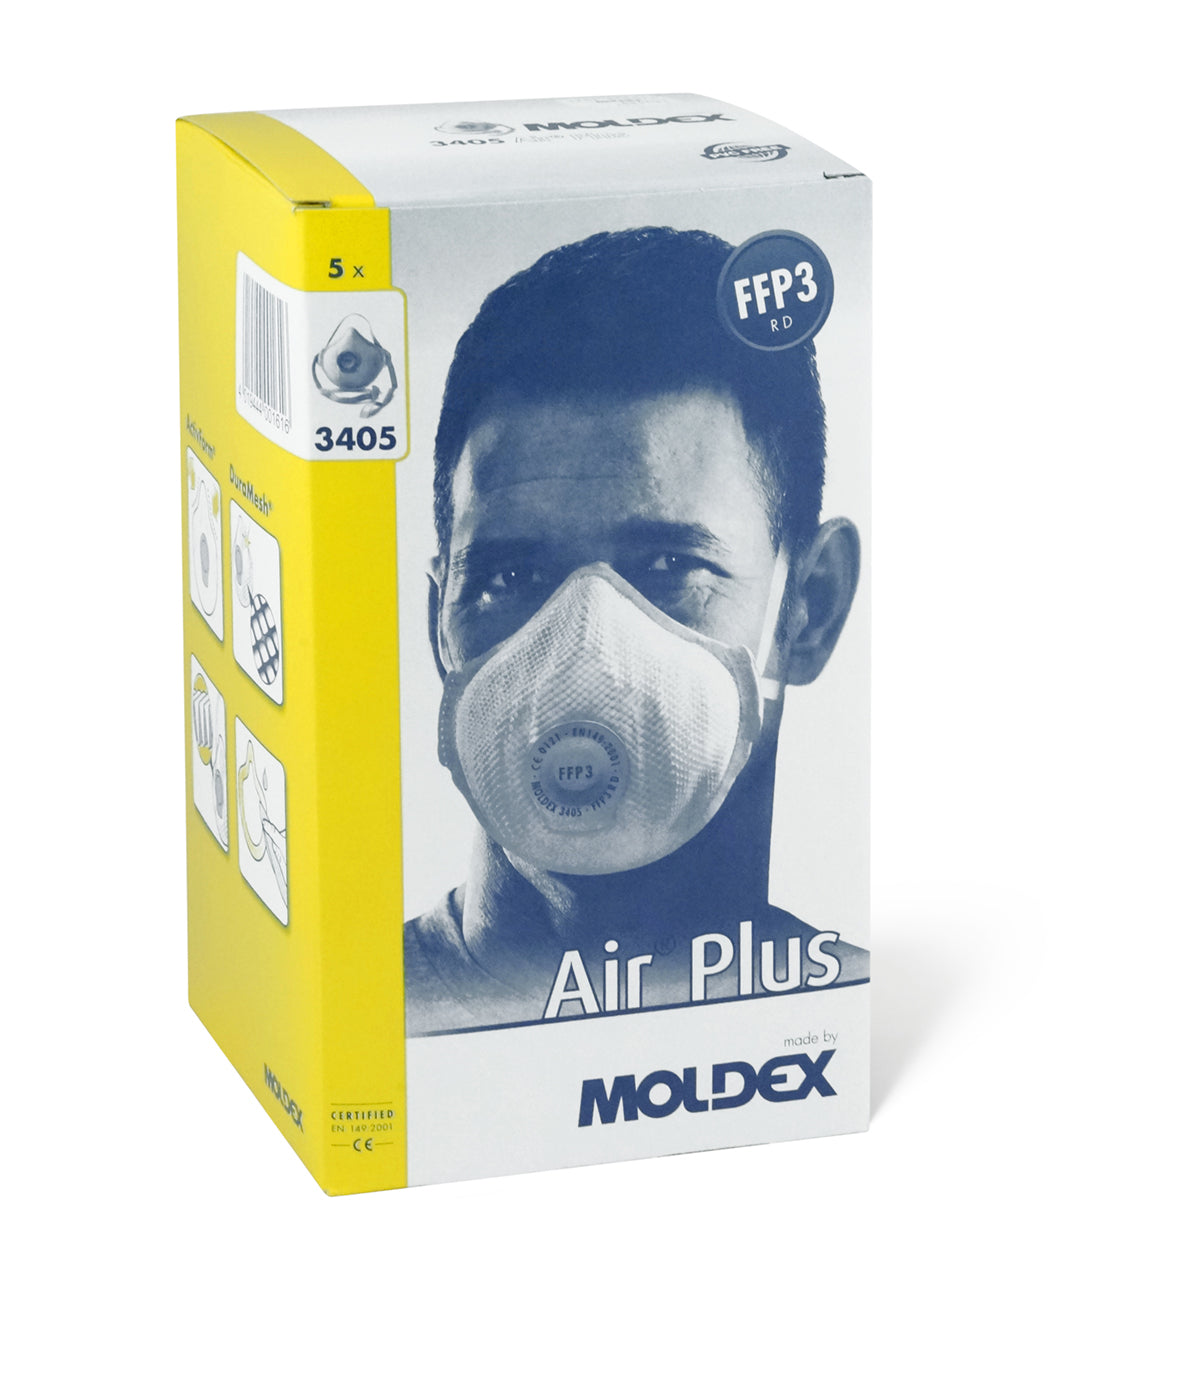 Moldex AIR Plus FFP3 RD Valved (Box of 5) - DaltonSafety